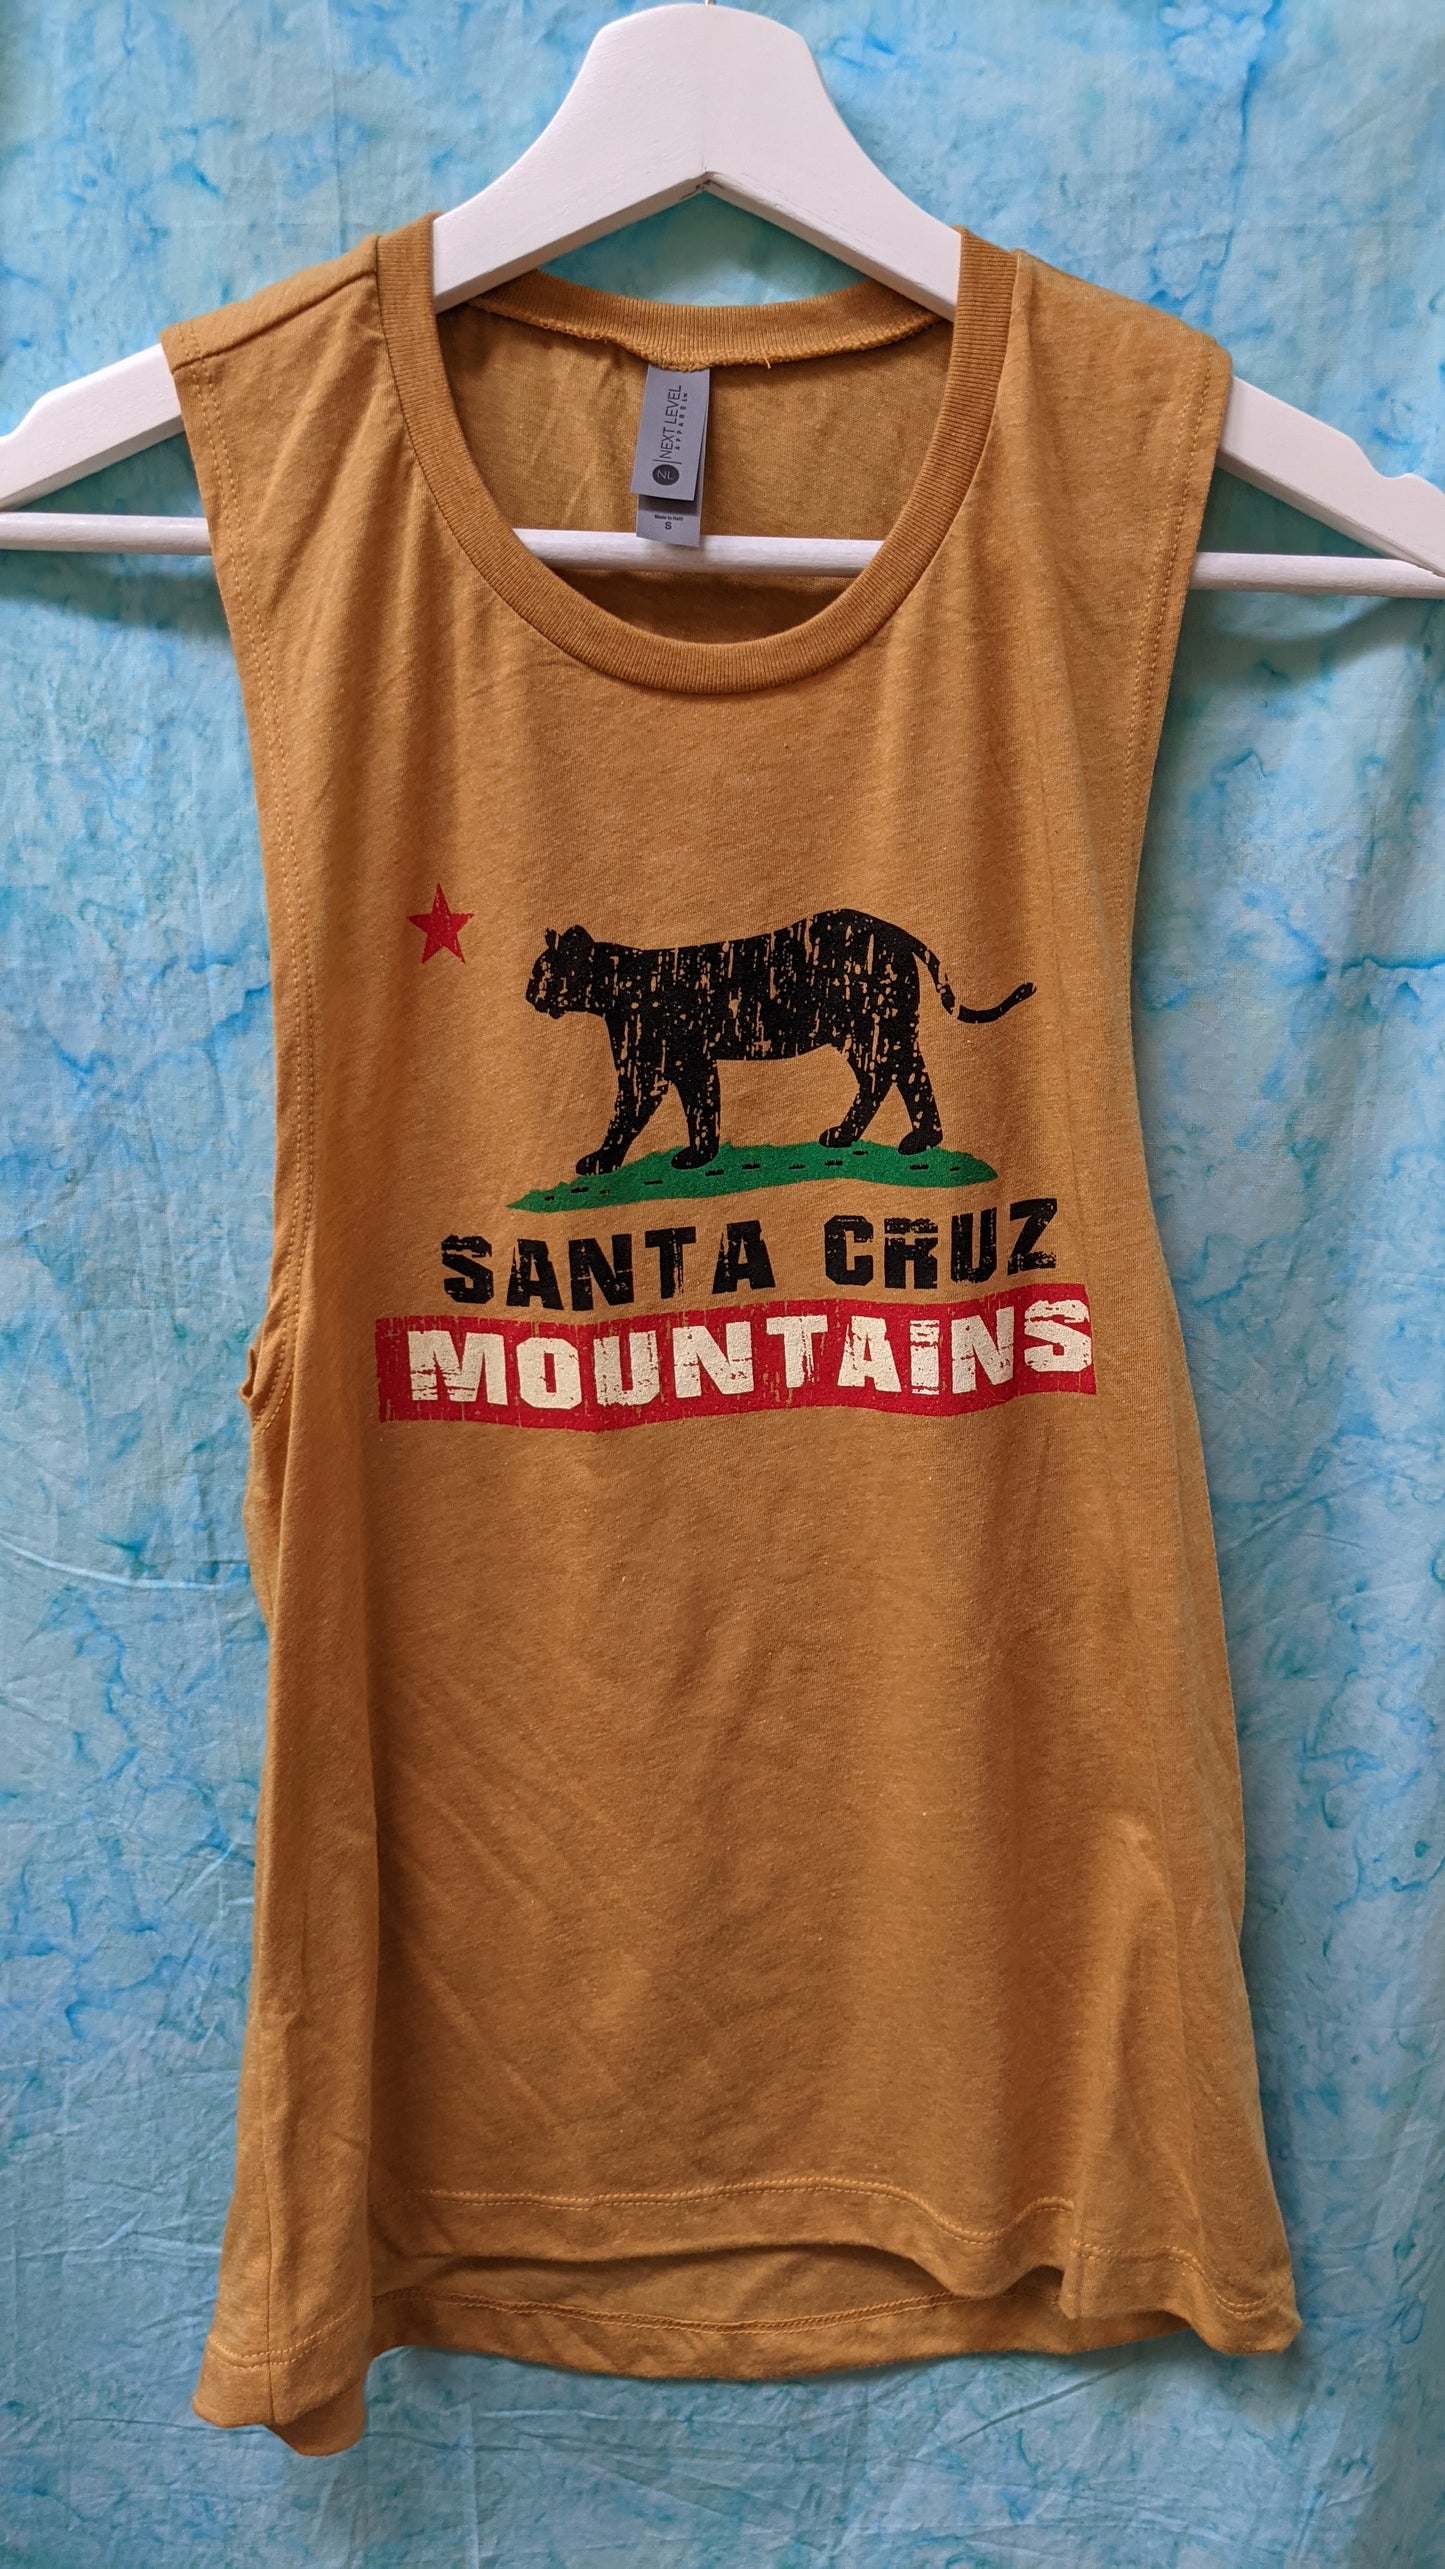 Mustard tank top with mountain lion reading "Santa Cruz Mountains", by SCM Clothing